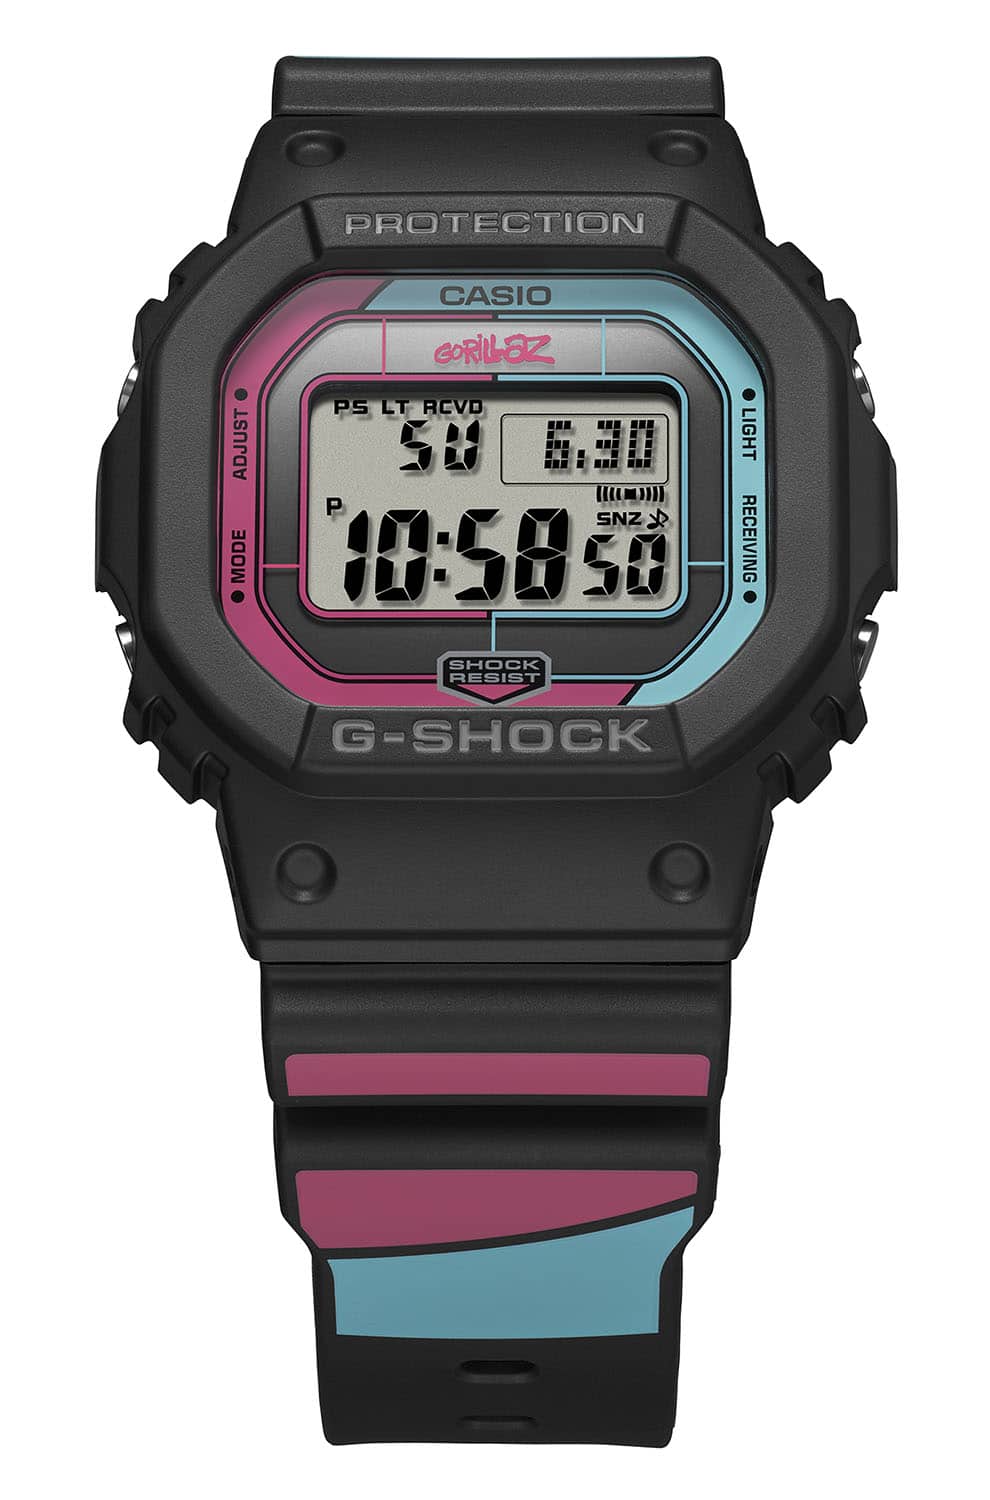 Tweede limited edition 2019 Gorillaz x G-Shock collectie horloges